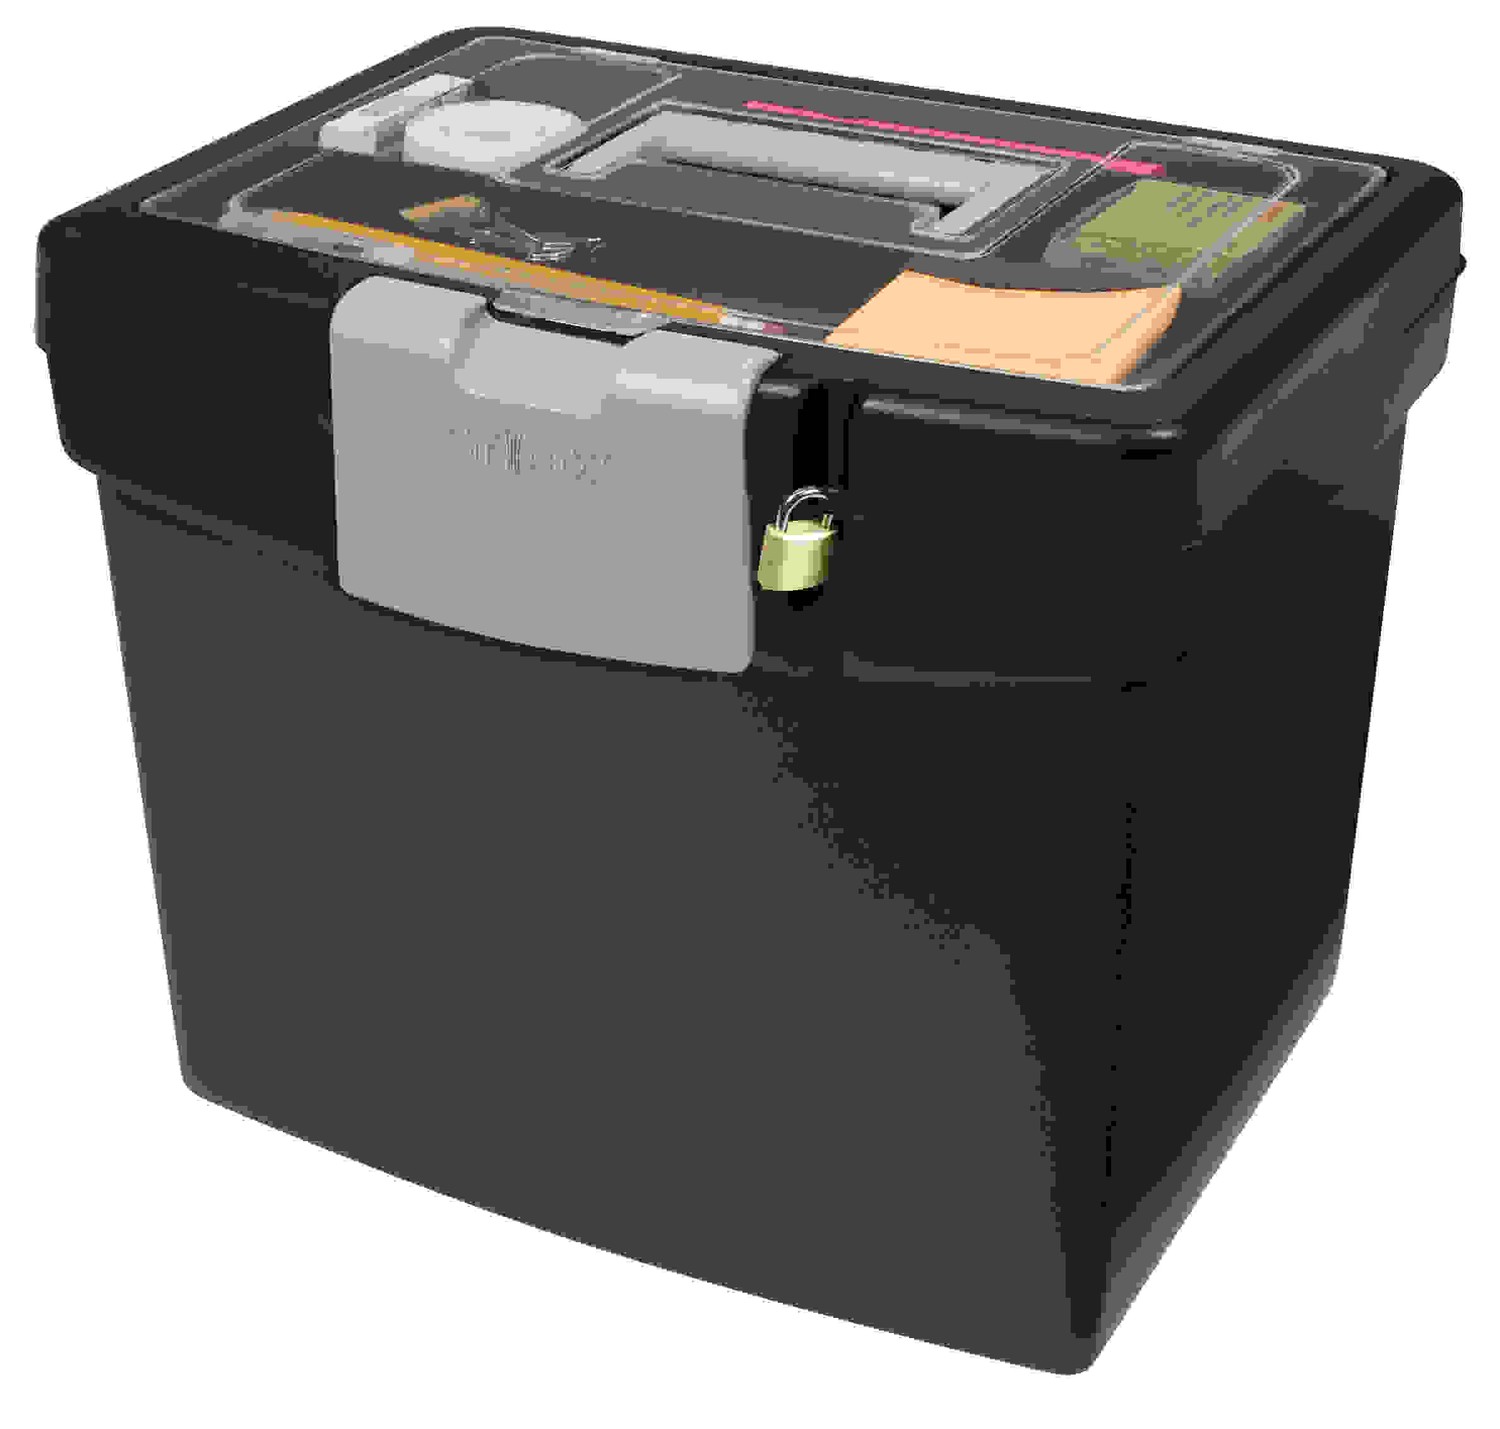 Portable File Box with XL Storage Lid, Black